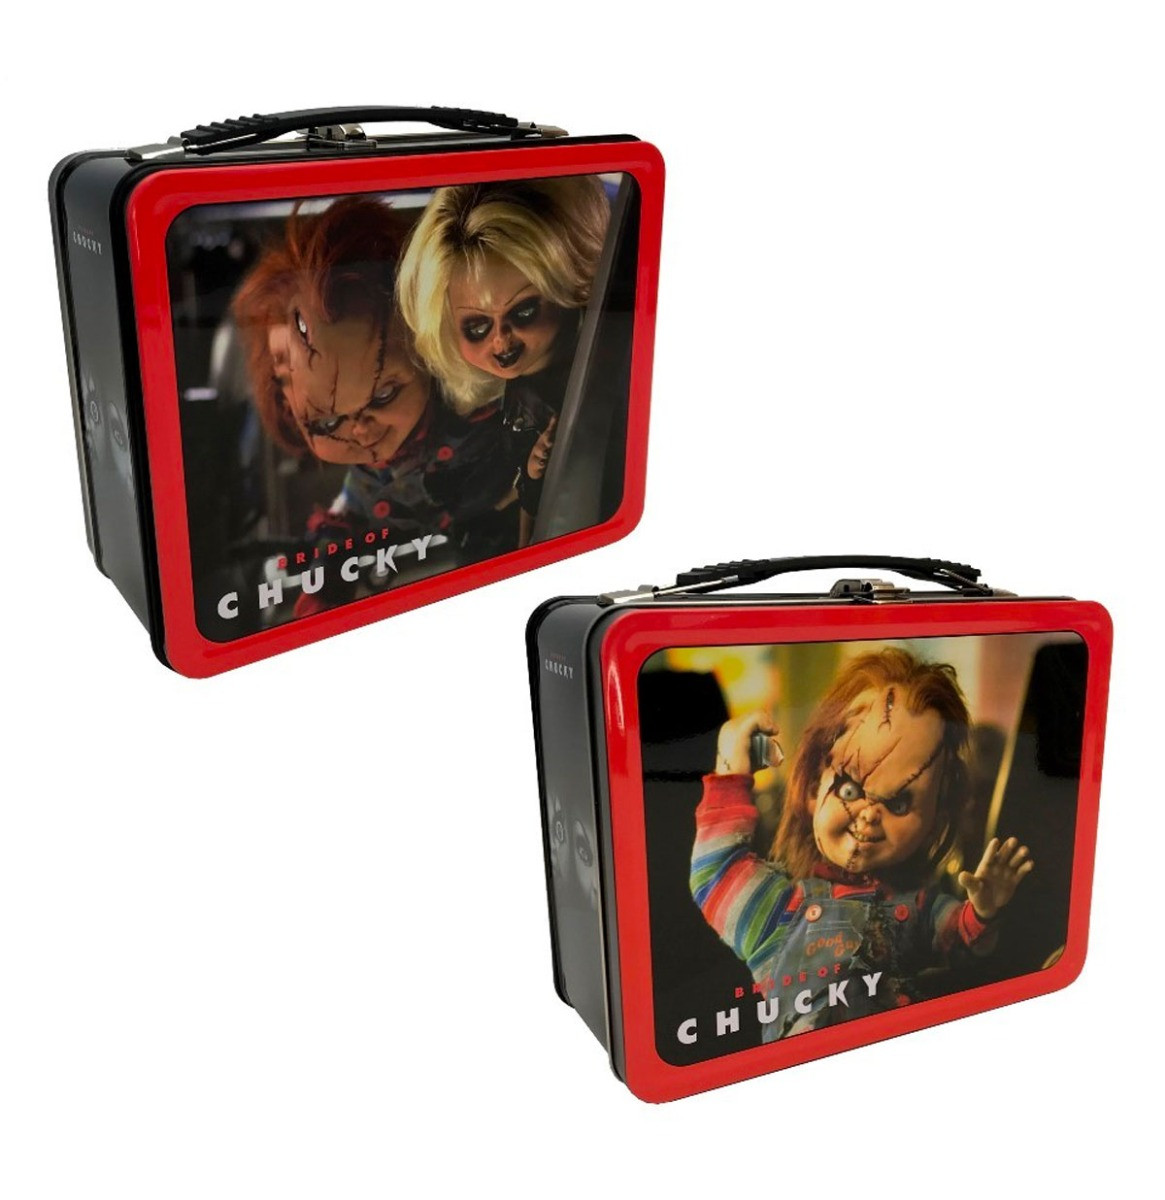 Bride Of Chucky: Bride Of Chucky Opbergblik Lunch Box